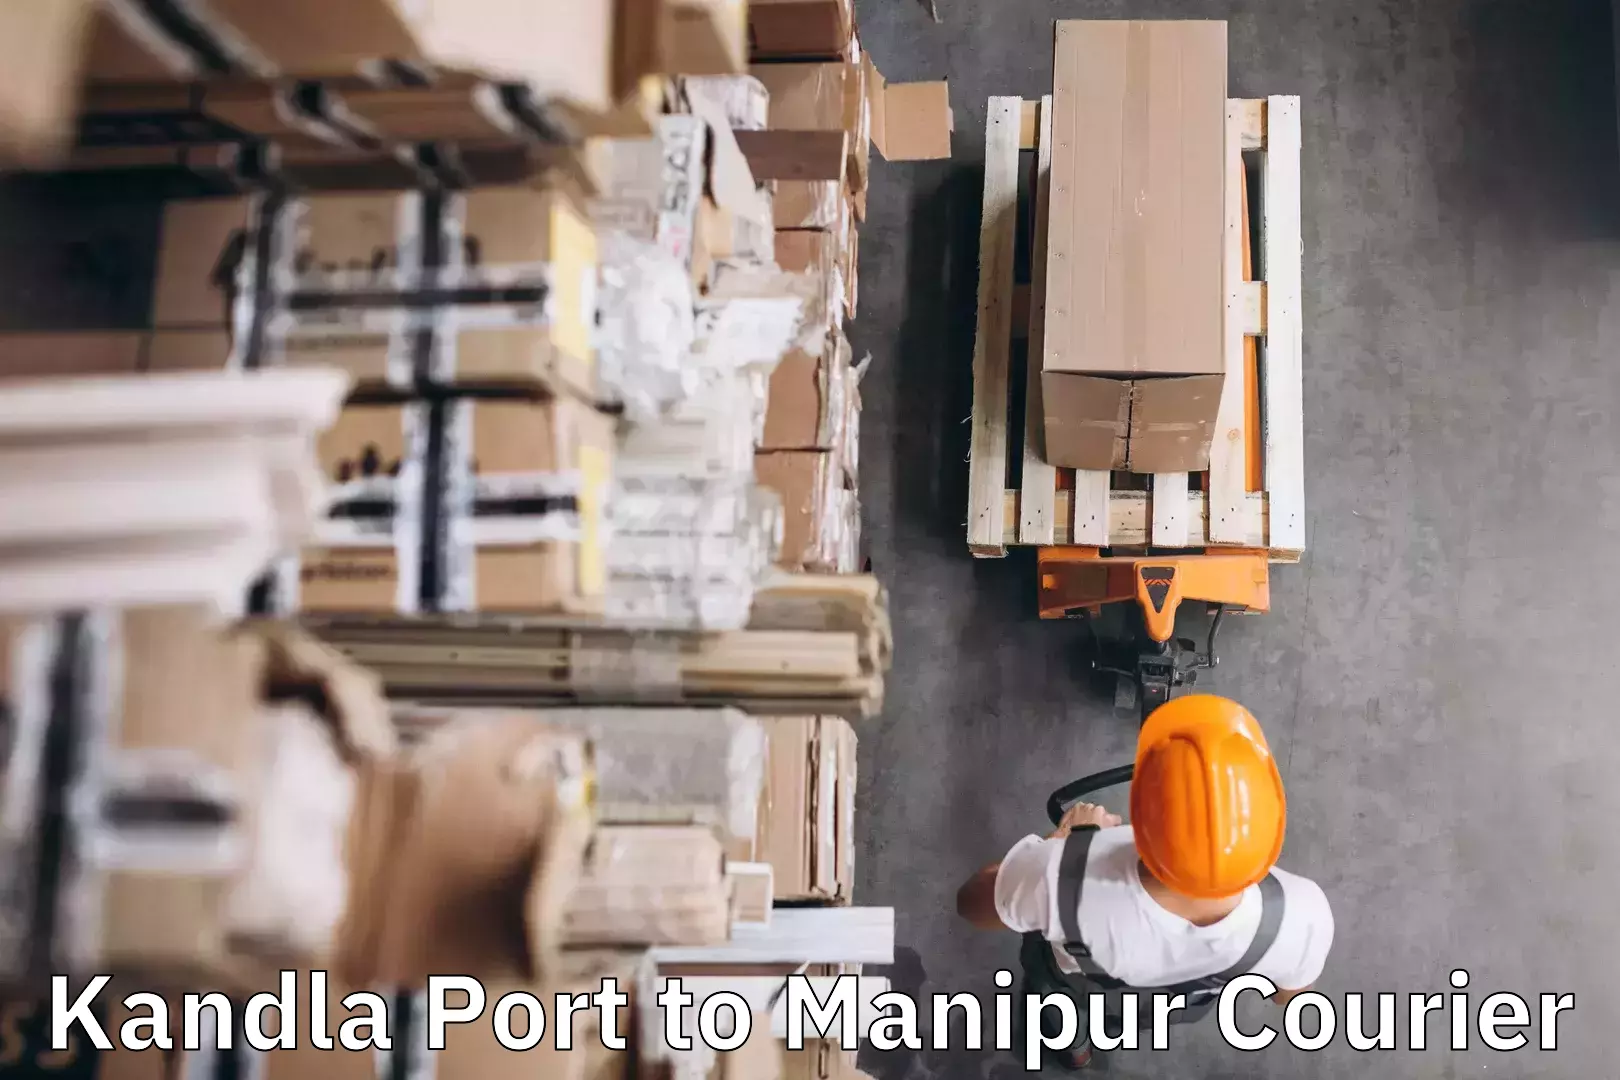 Baggage transport professionals Kandla Port to Manipur